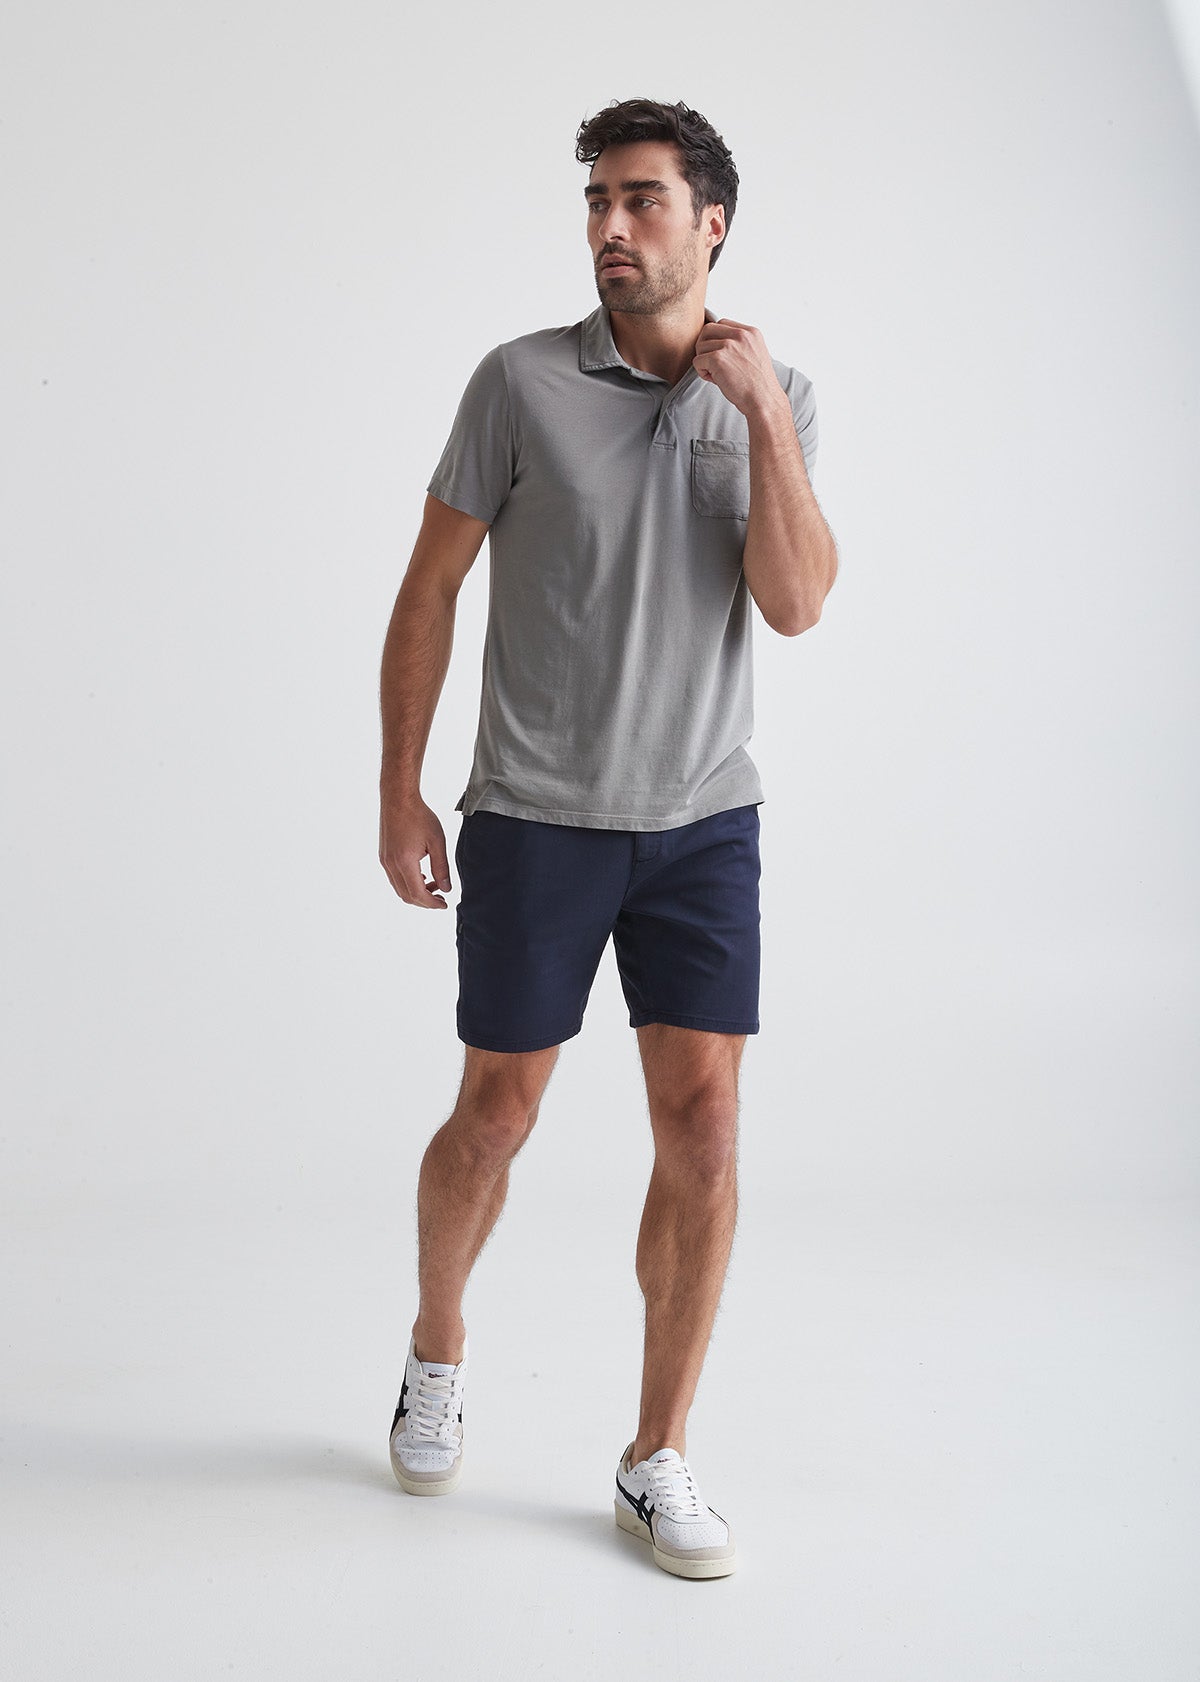 Men's Slim Fit Shorts